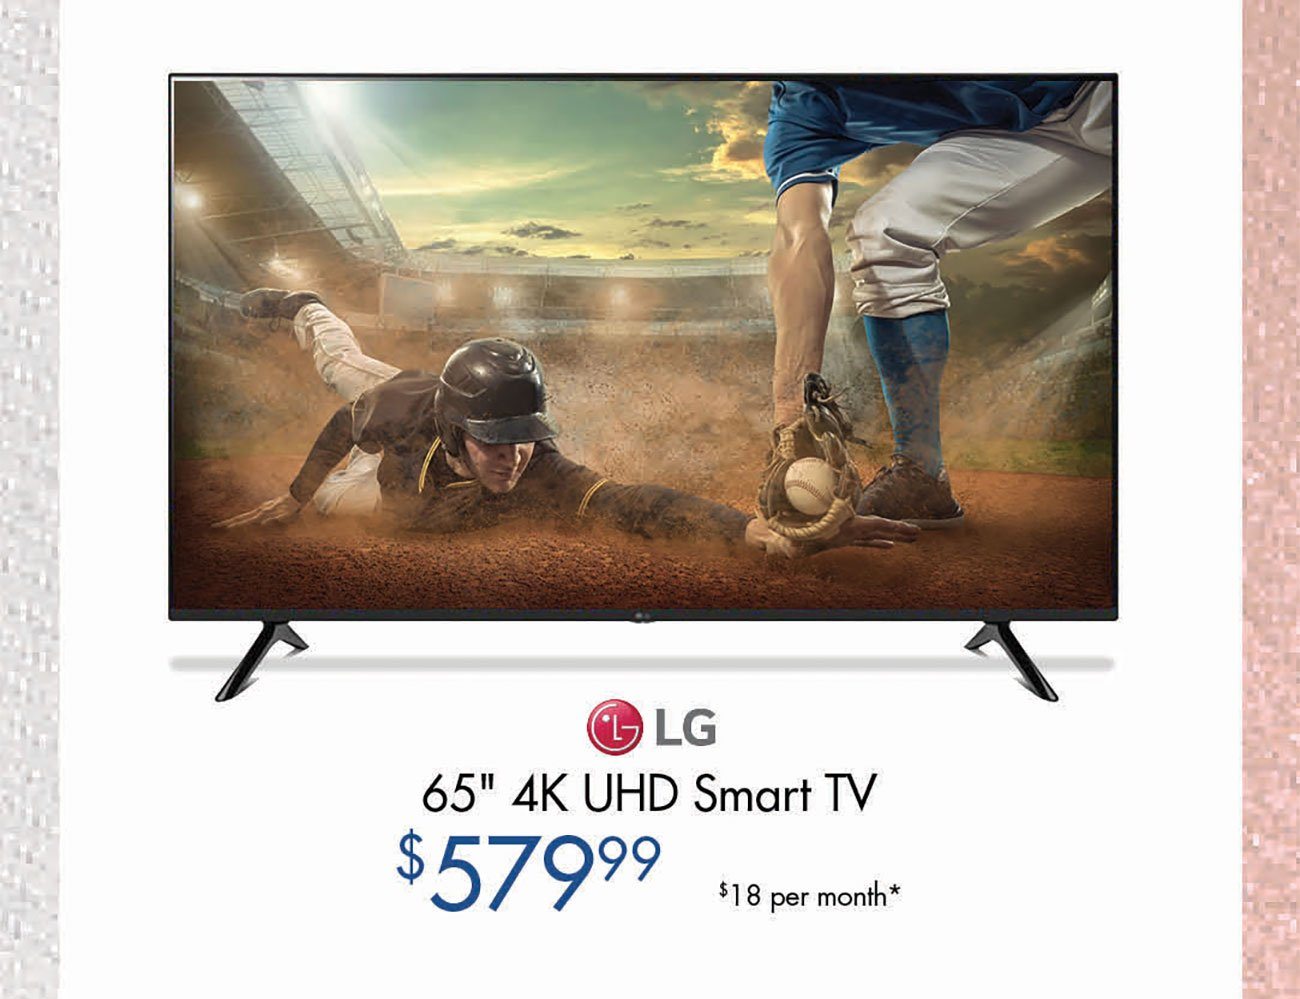 LG-65-4K-UHD-Smart-TV